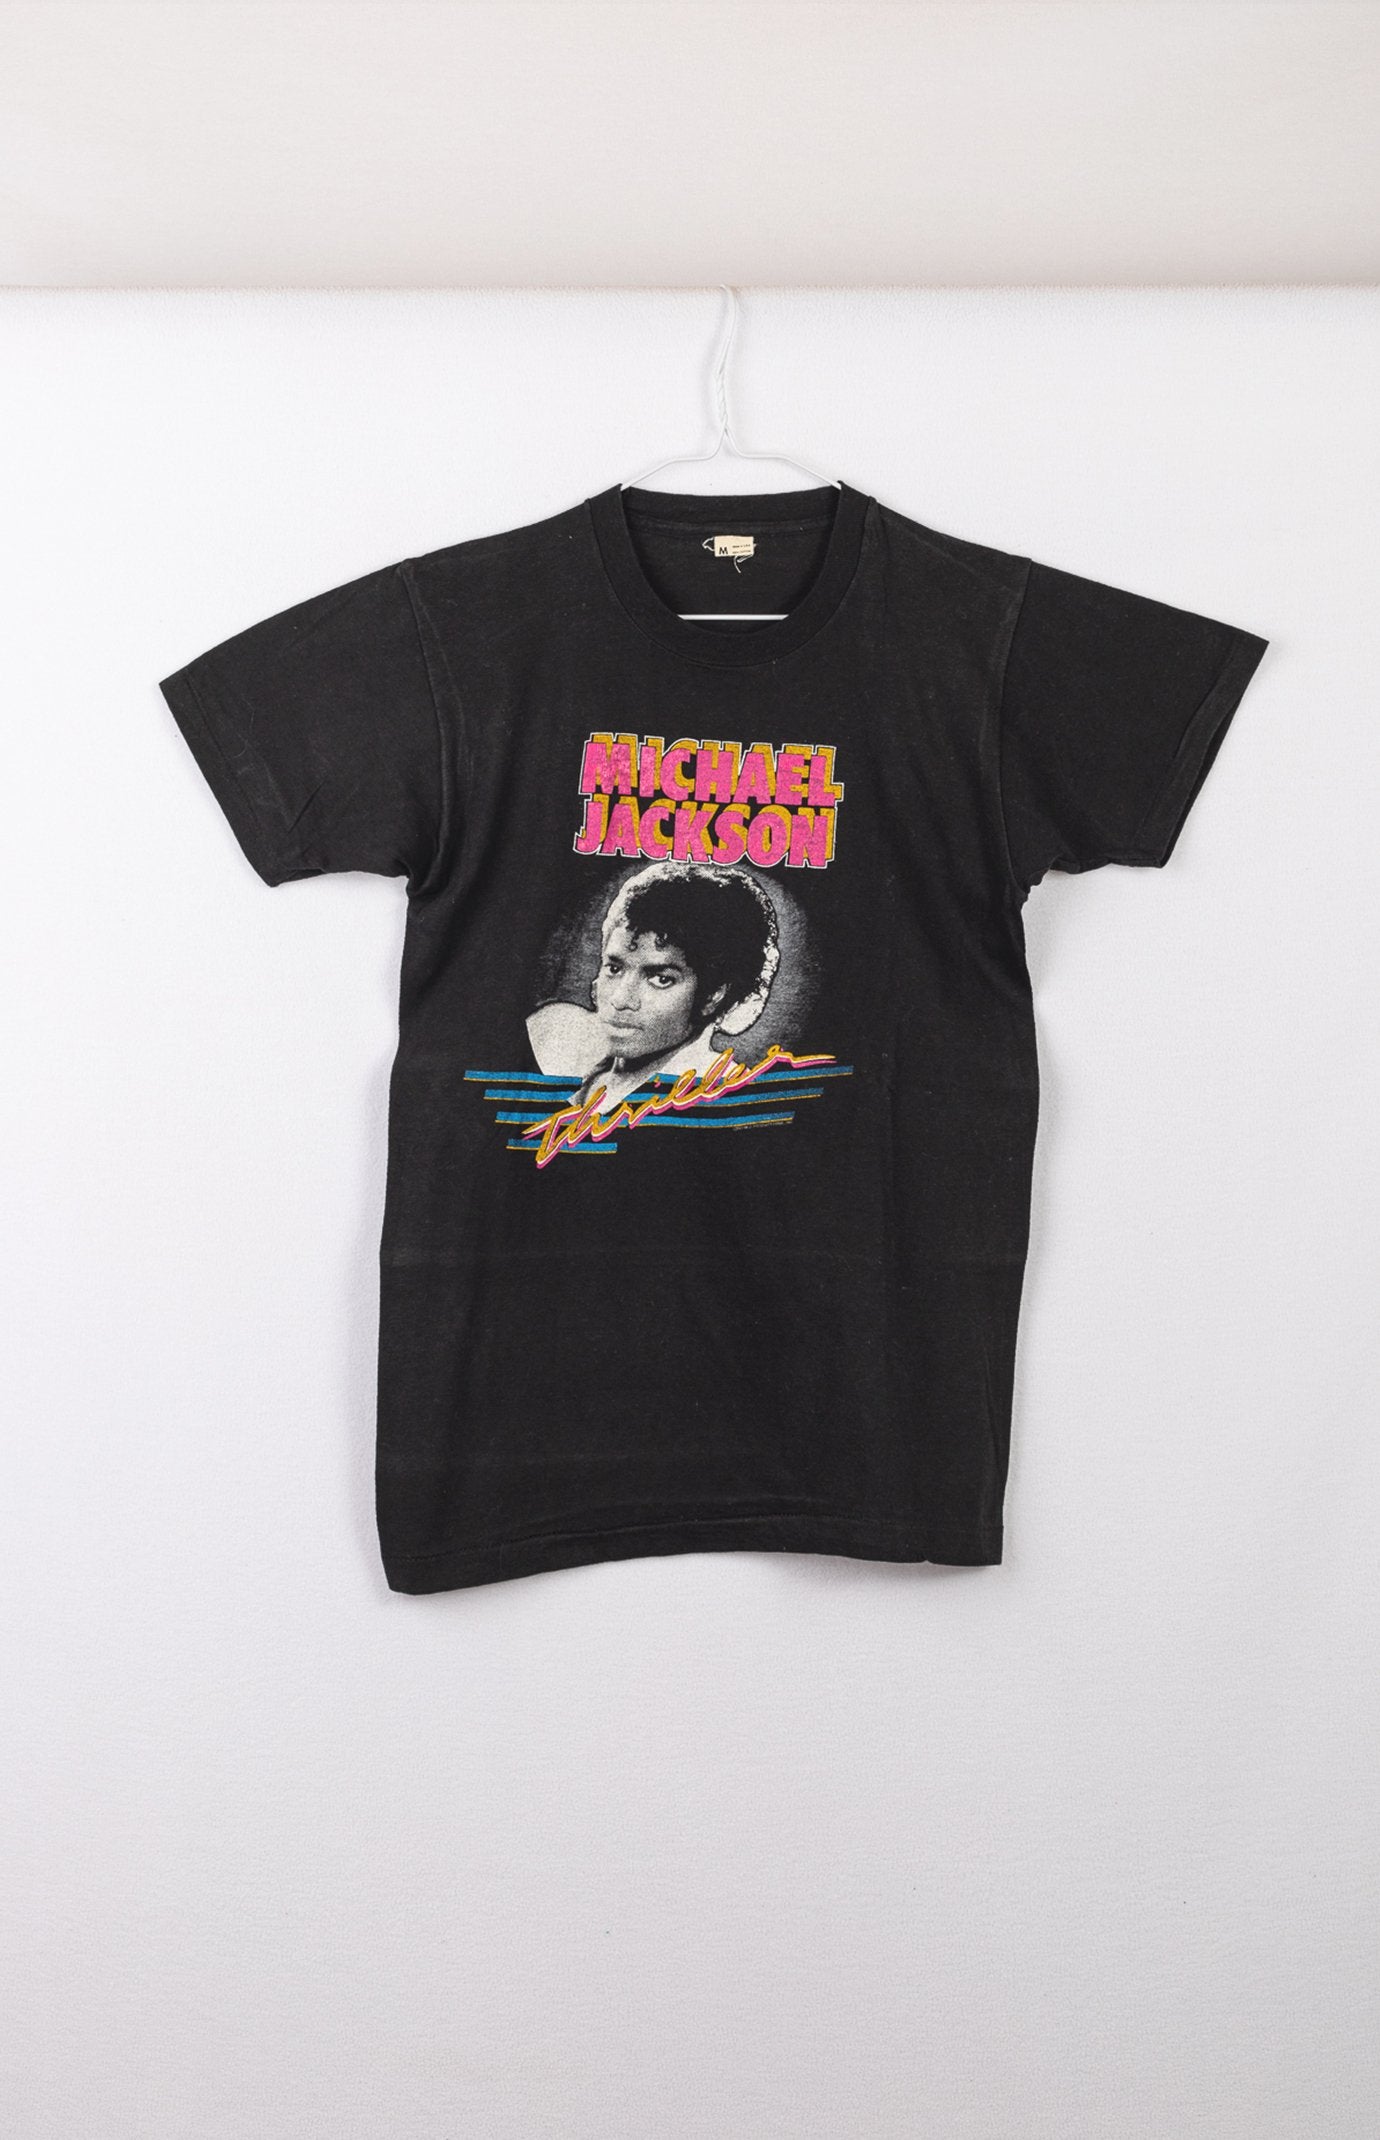 Michael Jackson Tee, Vintage Graphic T-Shirts